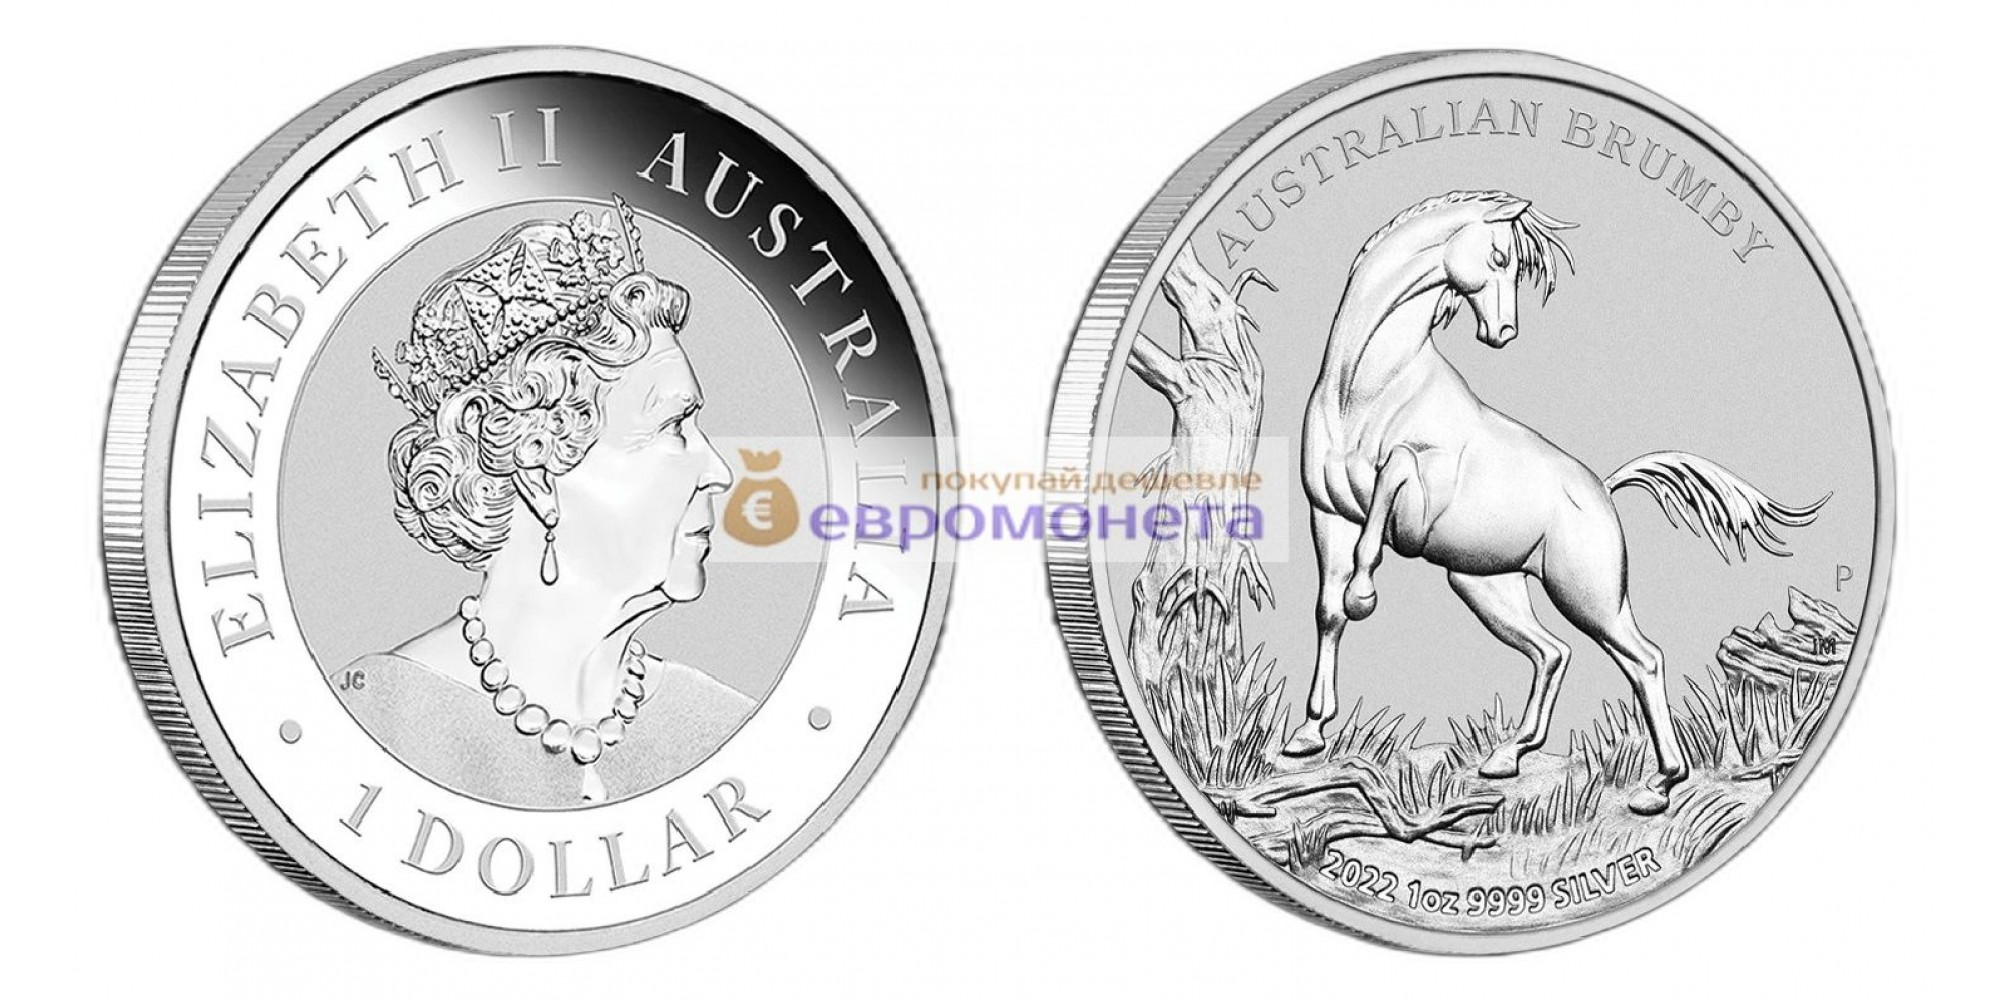 Австралия 1 доллар 2022 год Австралийский Брамби (Australian Brumby). Серебро унция 999 пробы